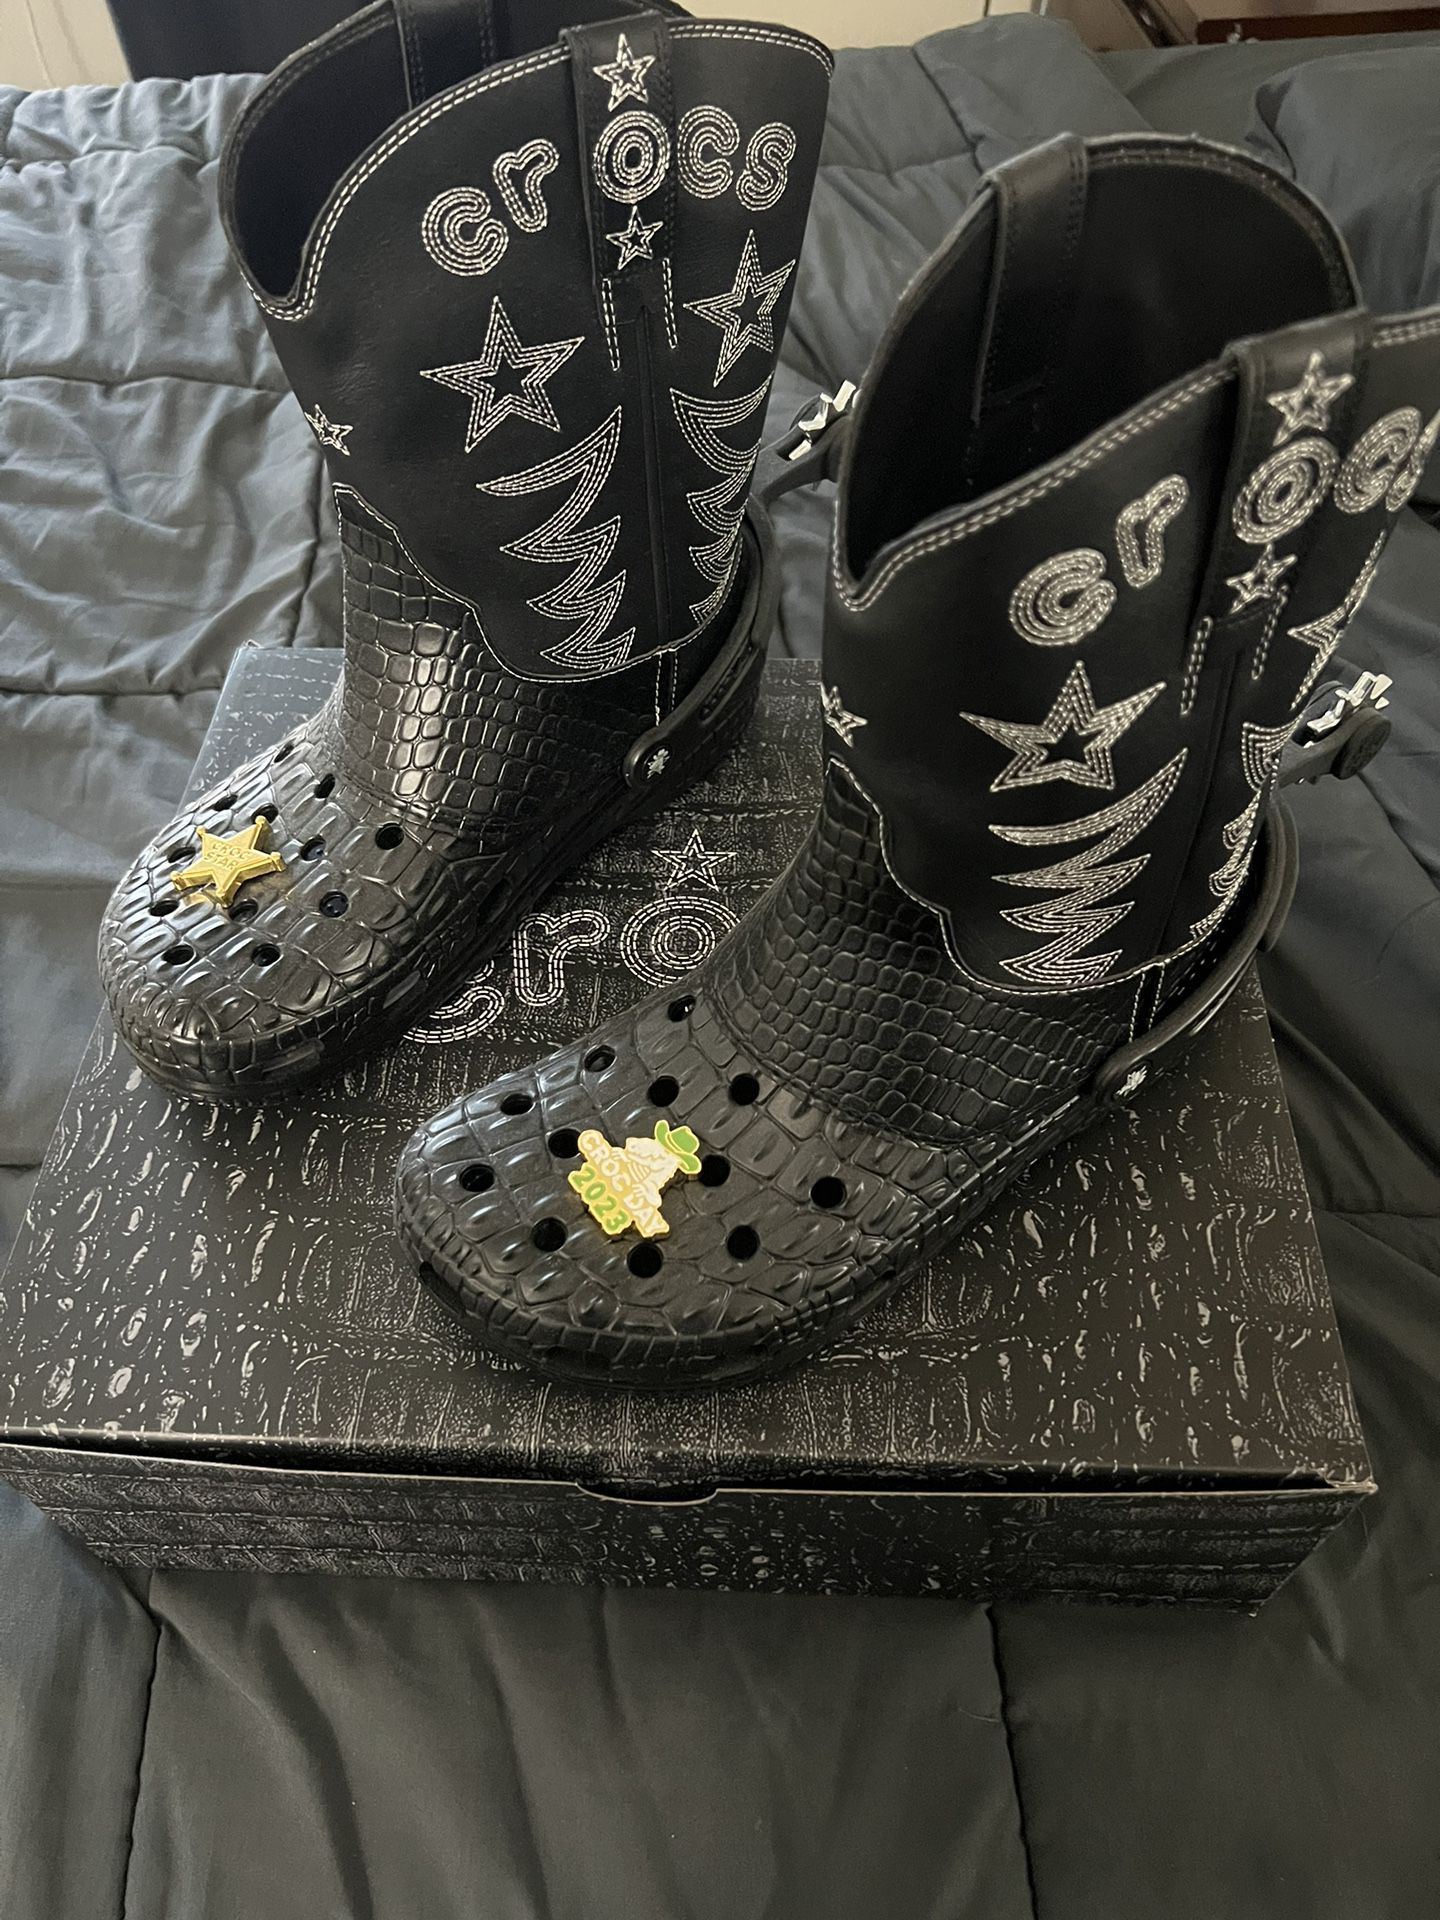 Men’s Size 11 Crocs Cowboy Boots 